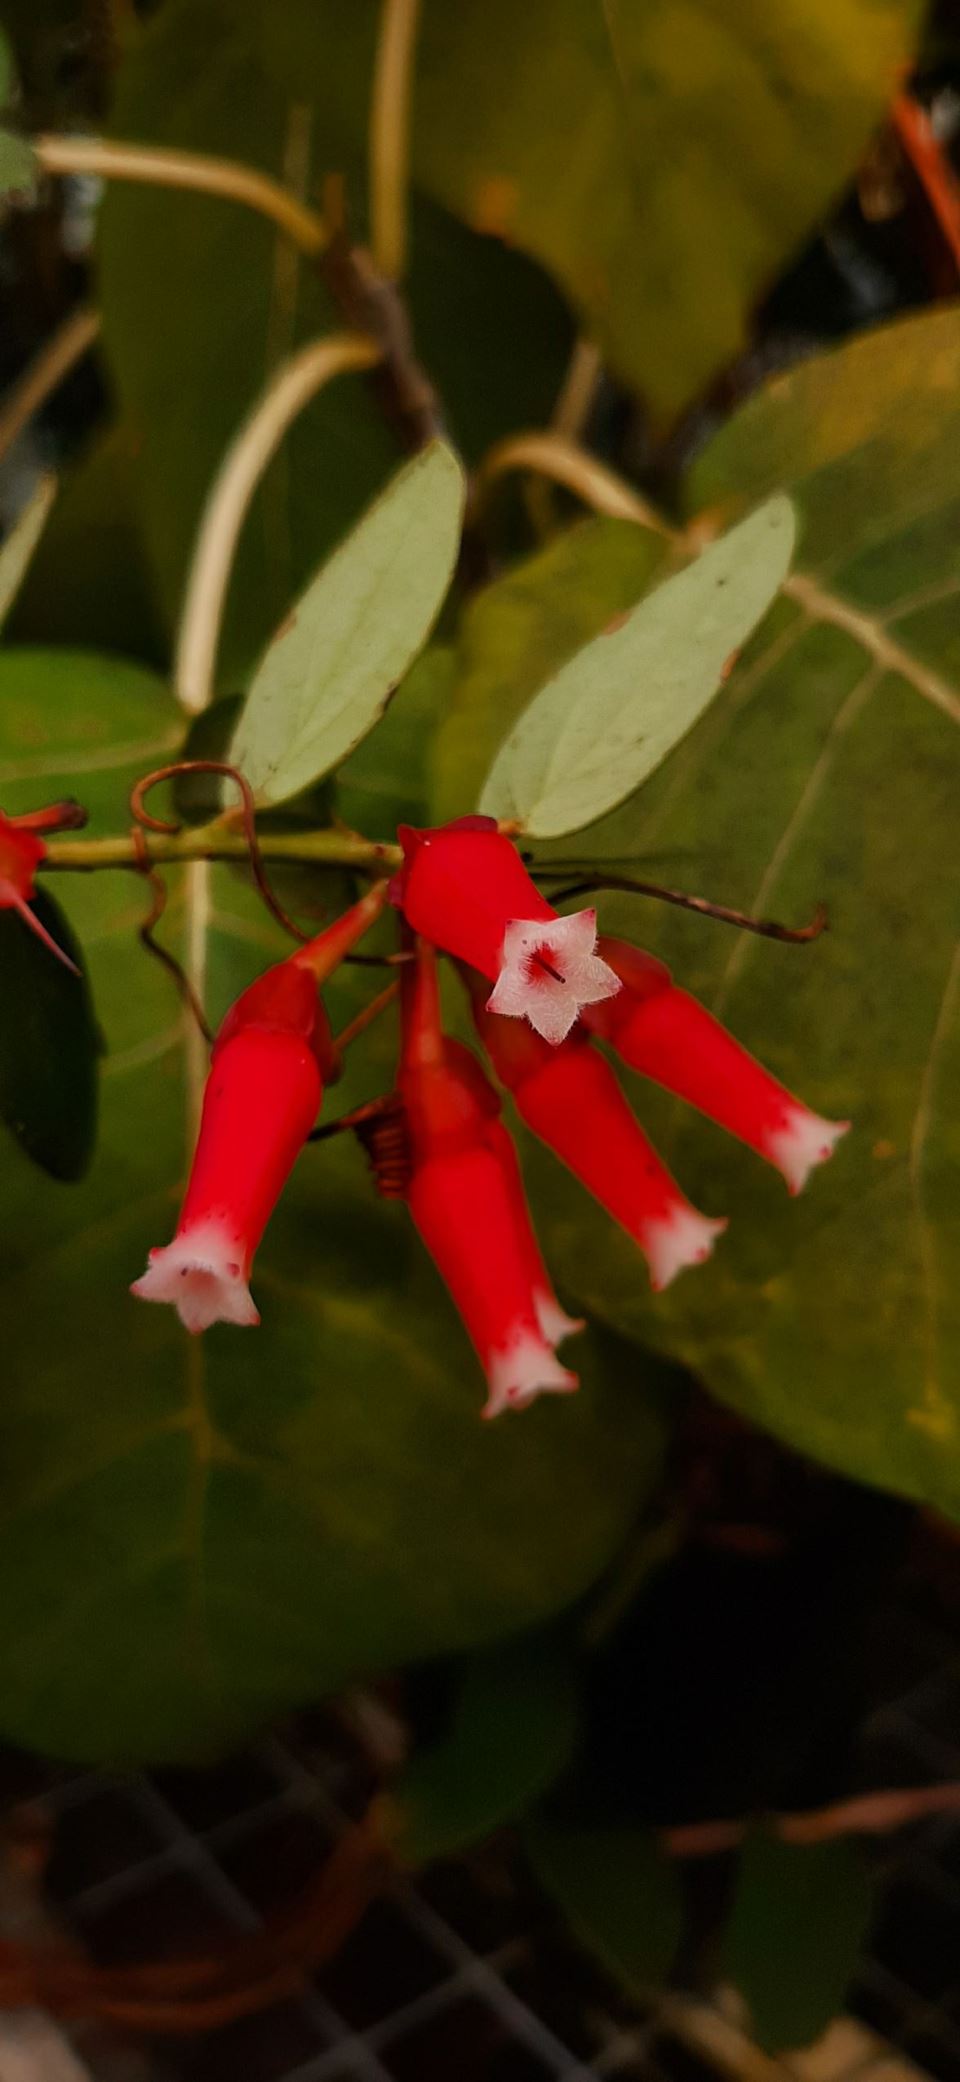 Macleania cordifolia - Hartbladige macleania